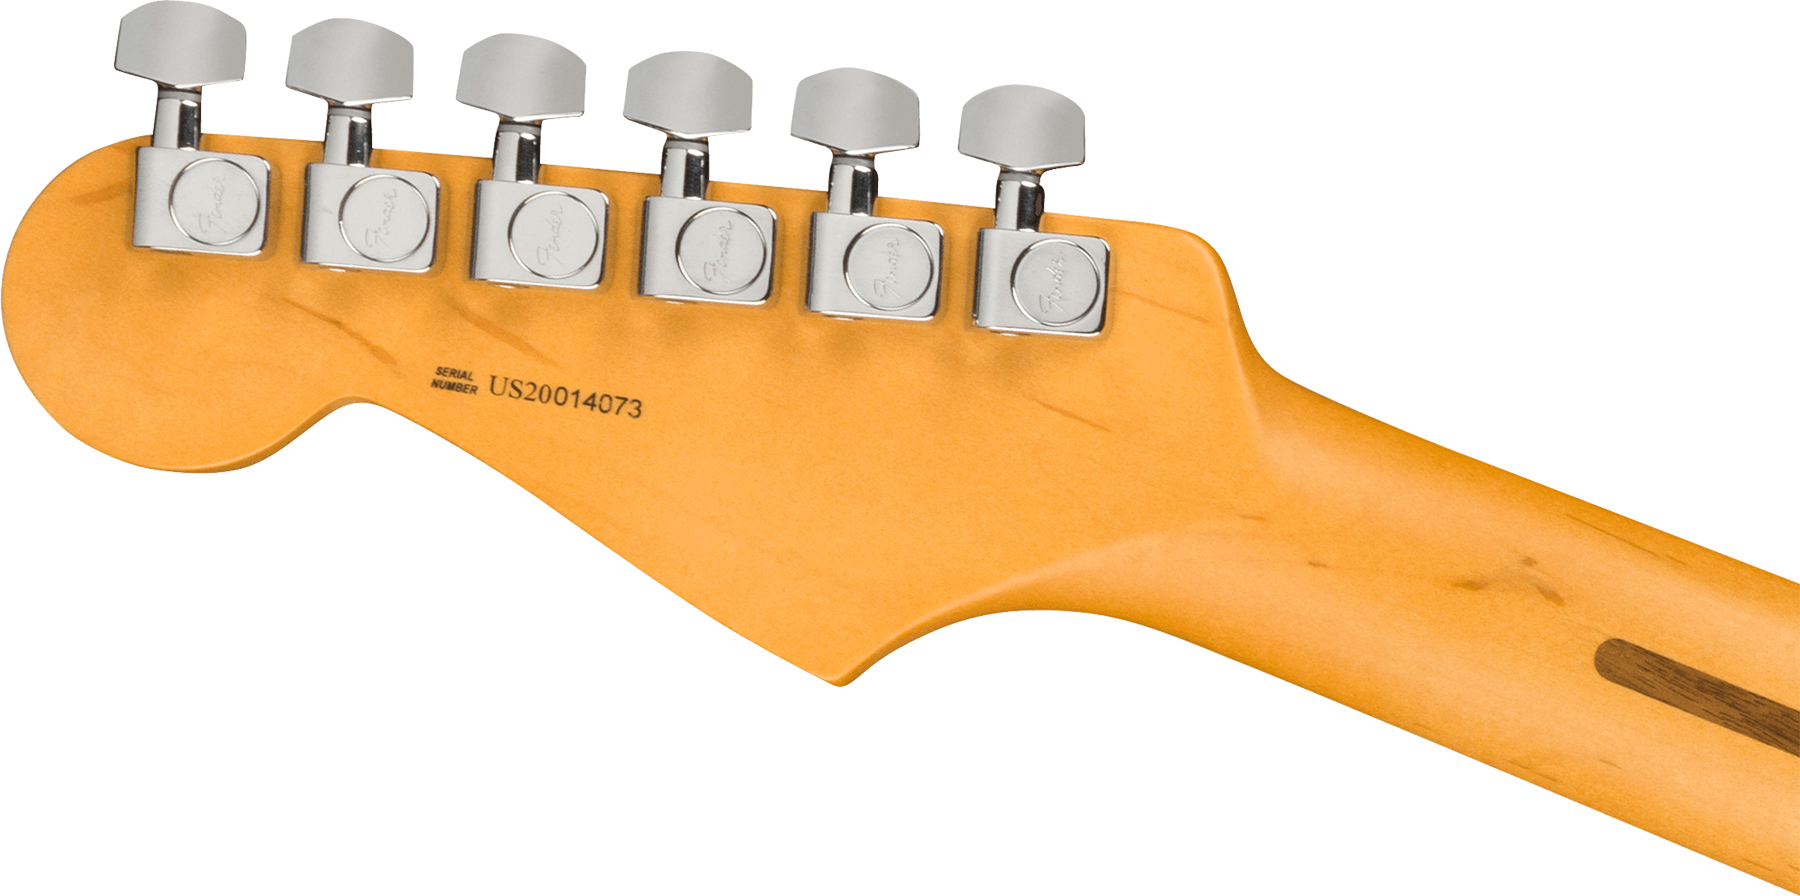 Fender Strat American Professional Ii Usa Mn - Miami Blue - Str shape electric guitar - Variation 3